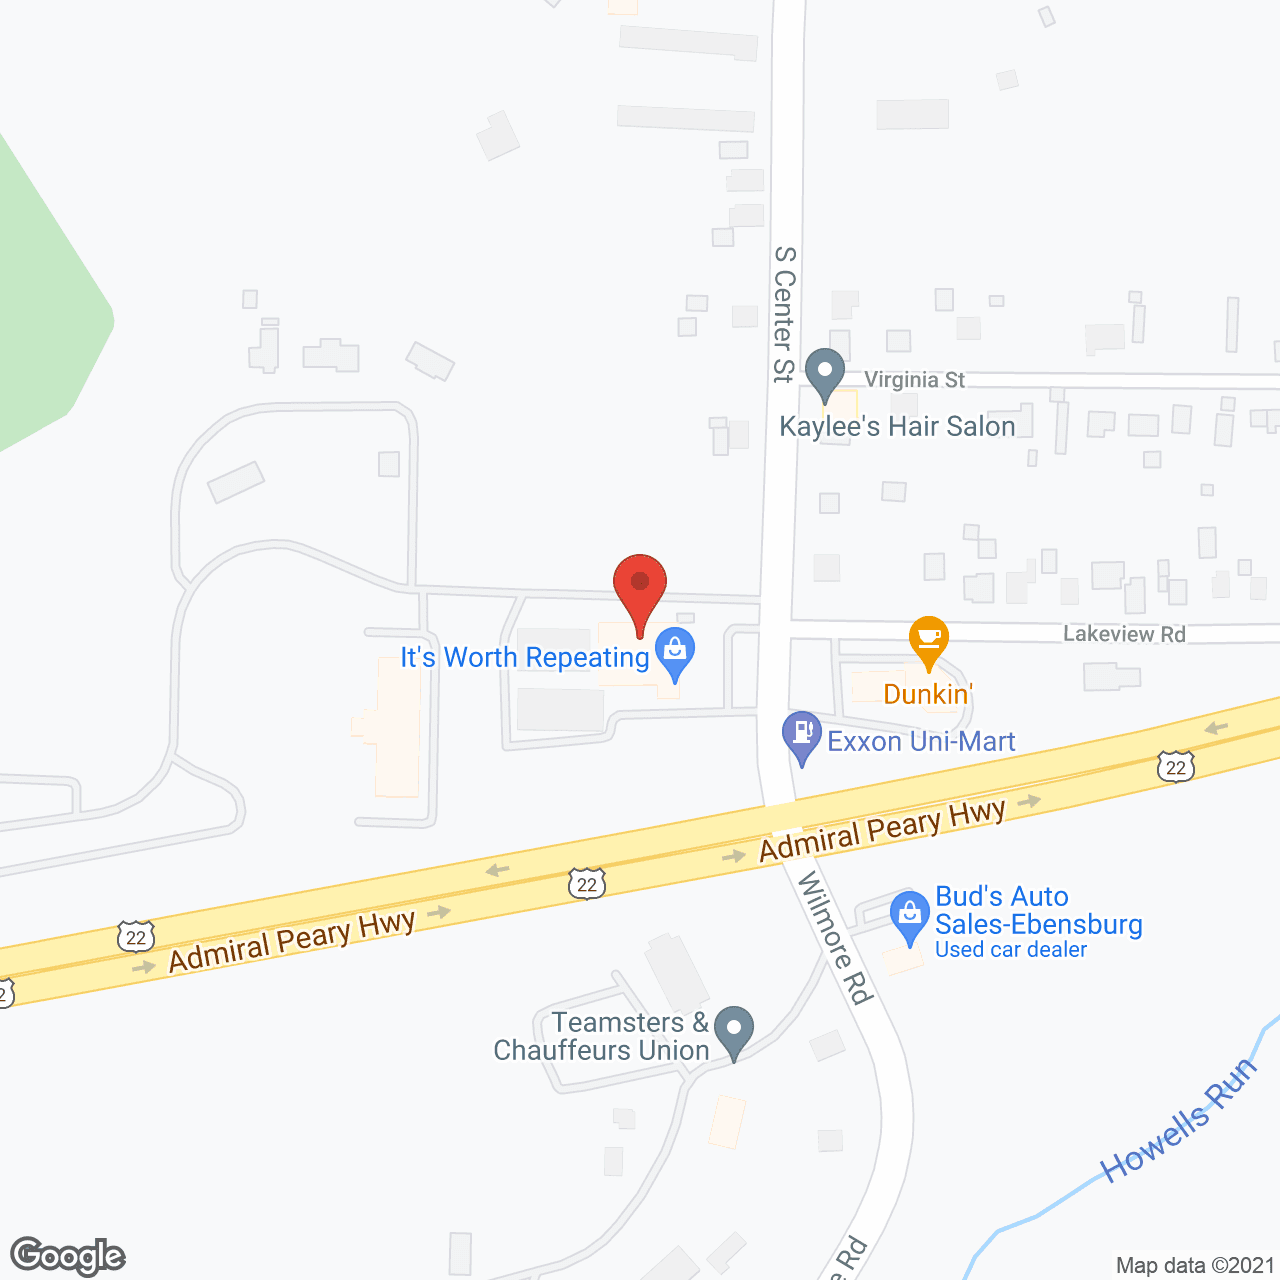 Cambridge Ebensburg in google map